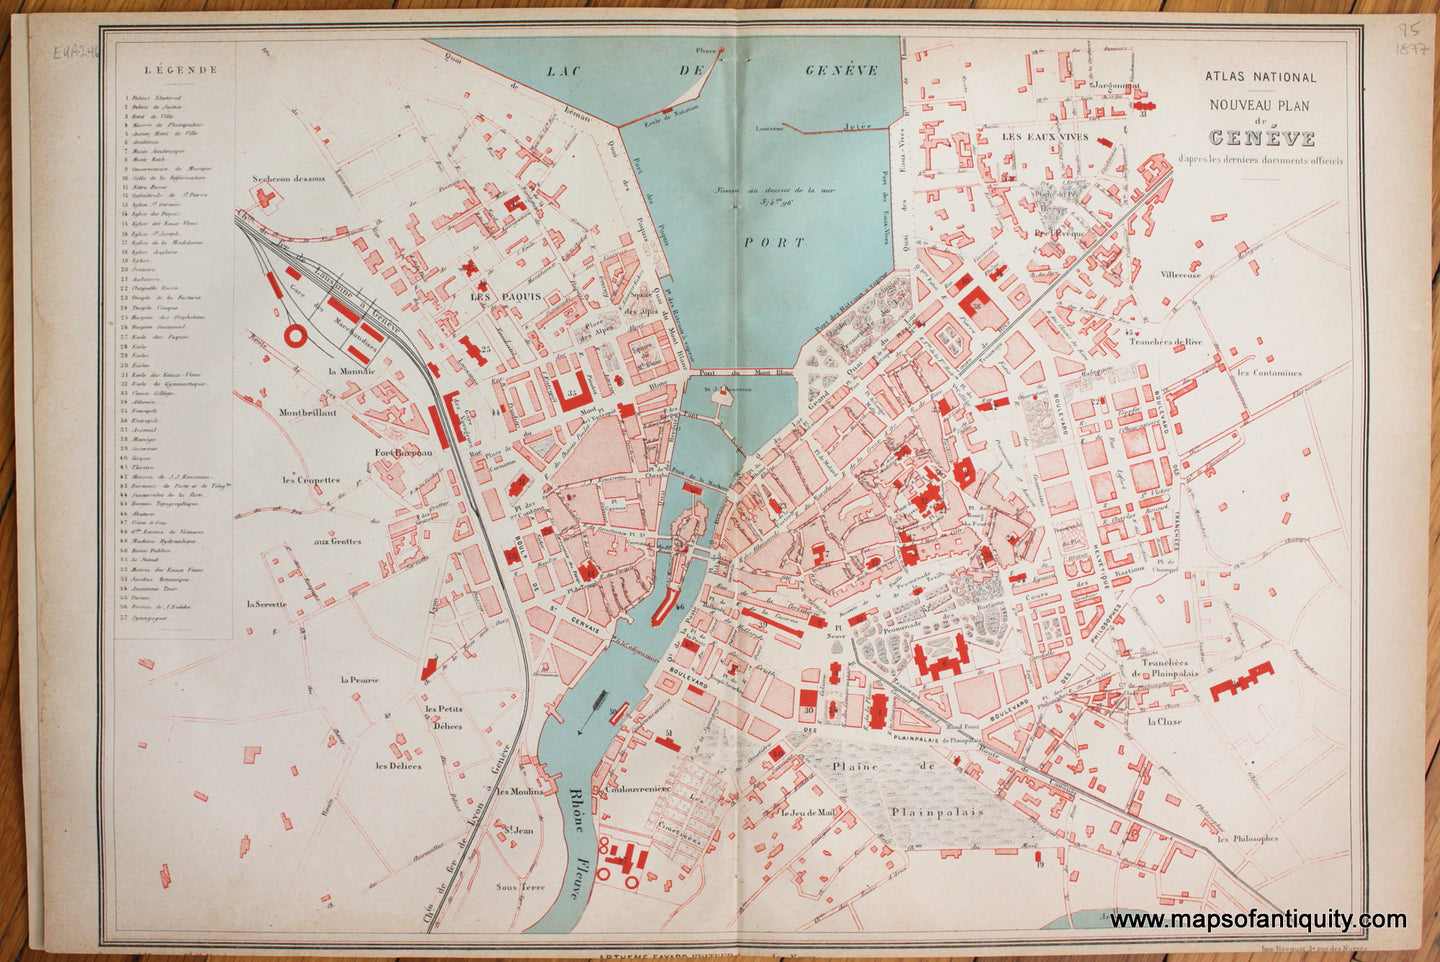 Antique-City-Map-nouveau-plan-de-Geneva-Geneve-Cities-Fayard-1877-1870s-1800s-Mid-Late-19th-Century-Maps-of-Antiquity